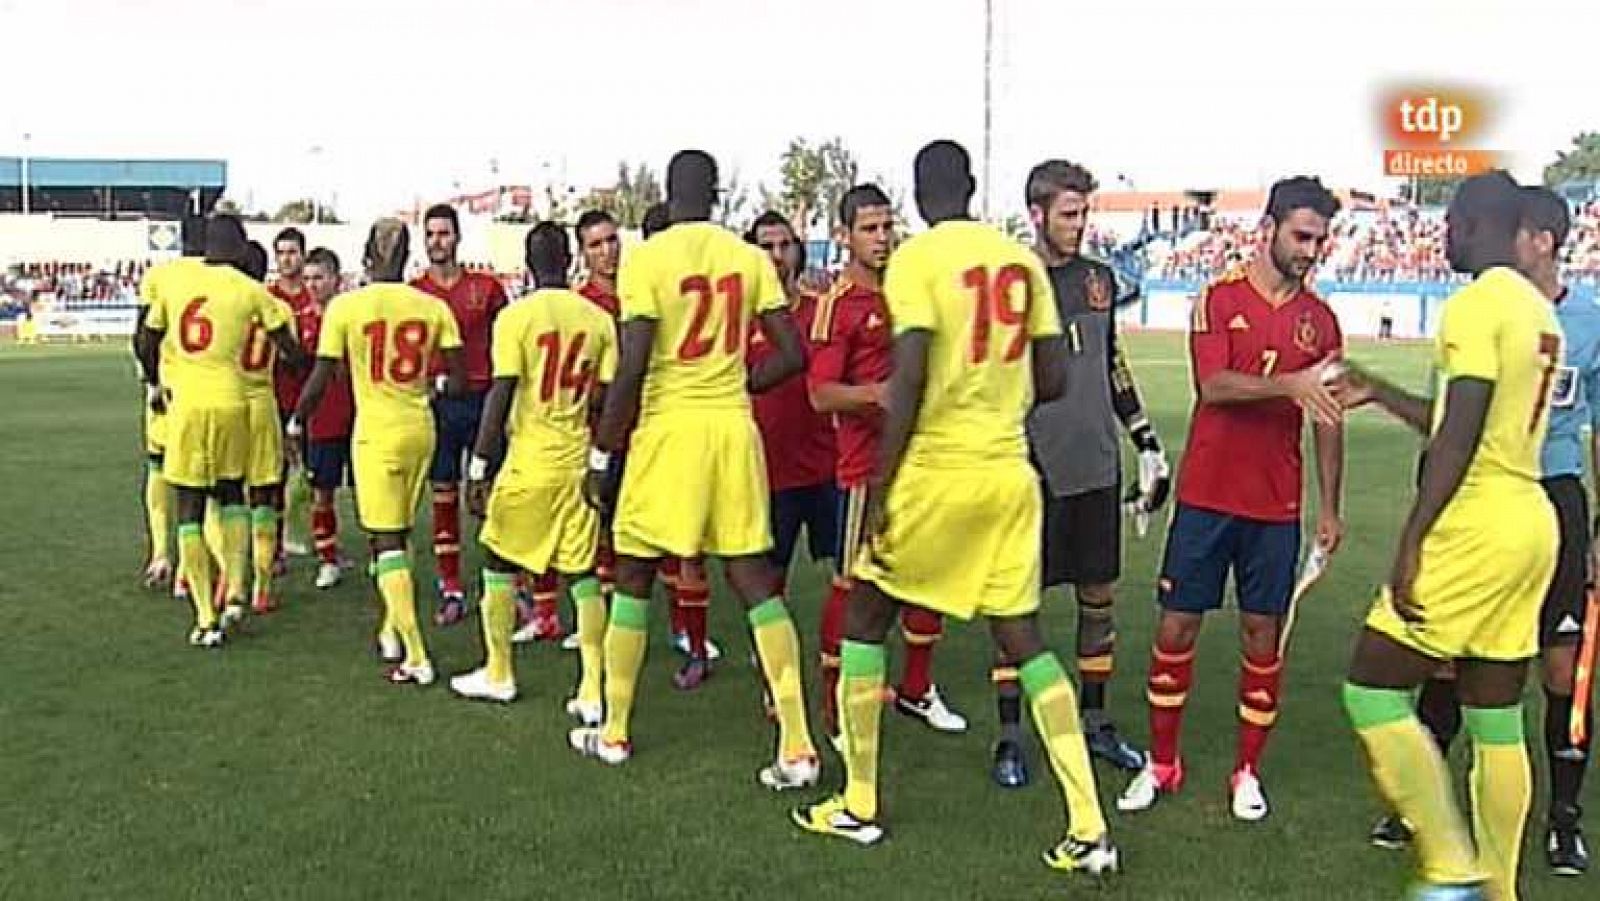 Fútbol - Preparación Preolímpica de la Selección española: España - Senegal